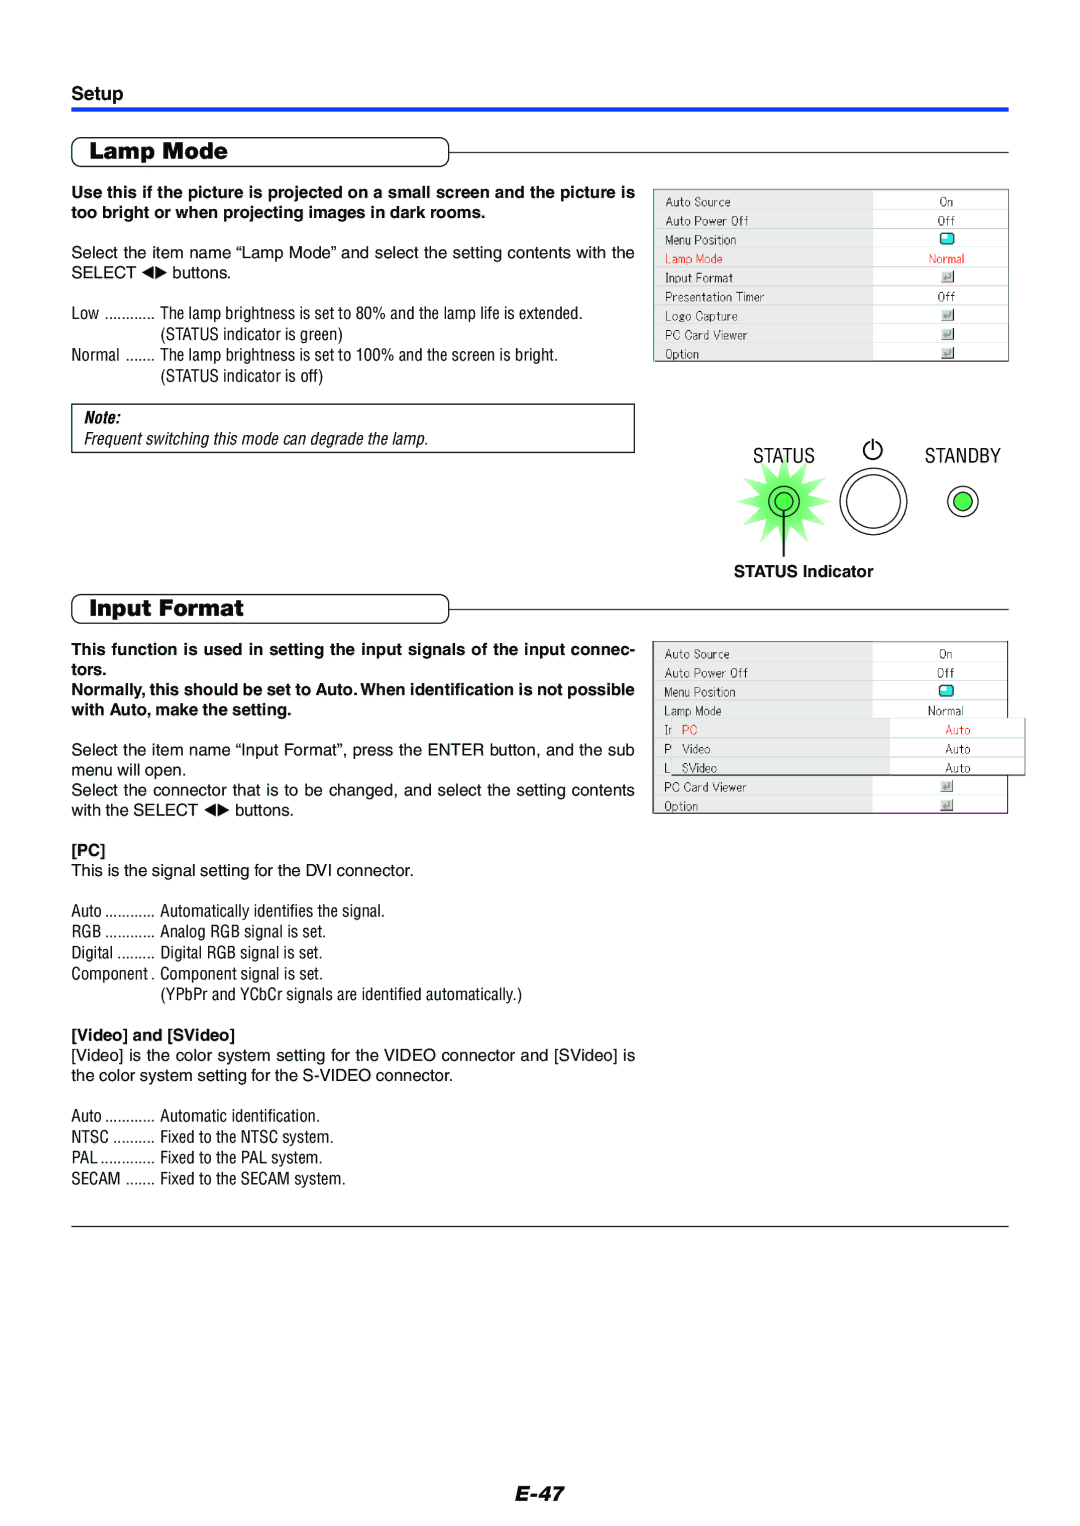 Mitsubishi Electronics XD50U user manual Input Format, Setup, Video and SVideo 